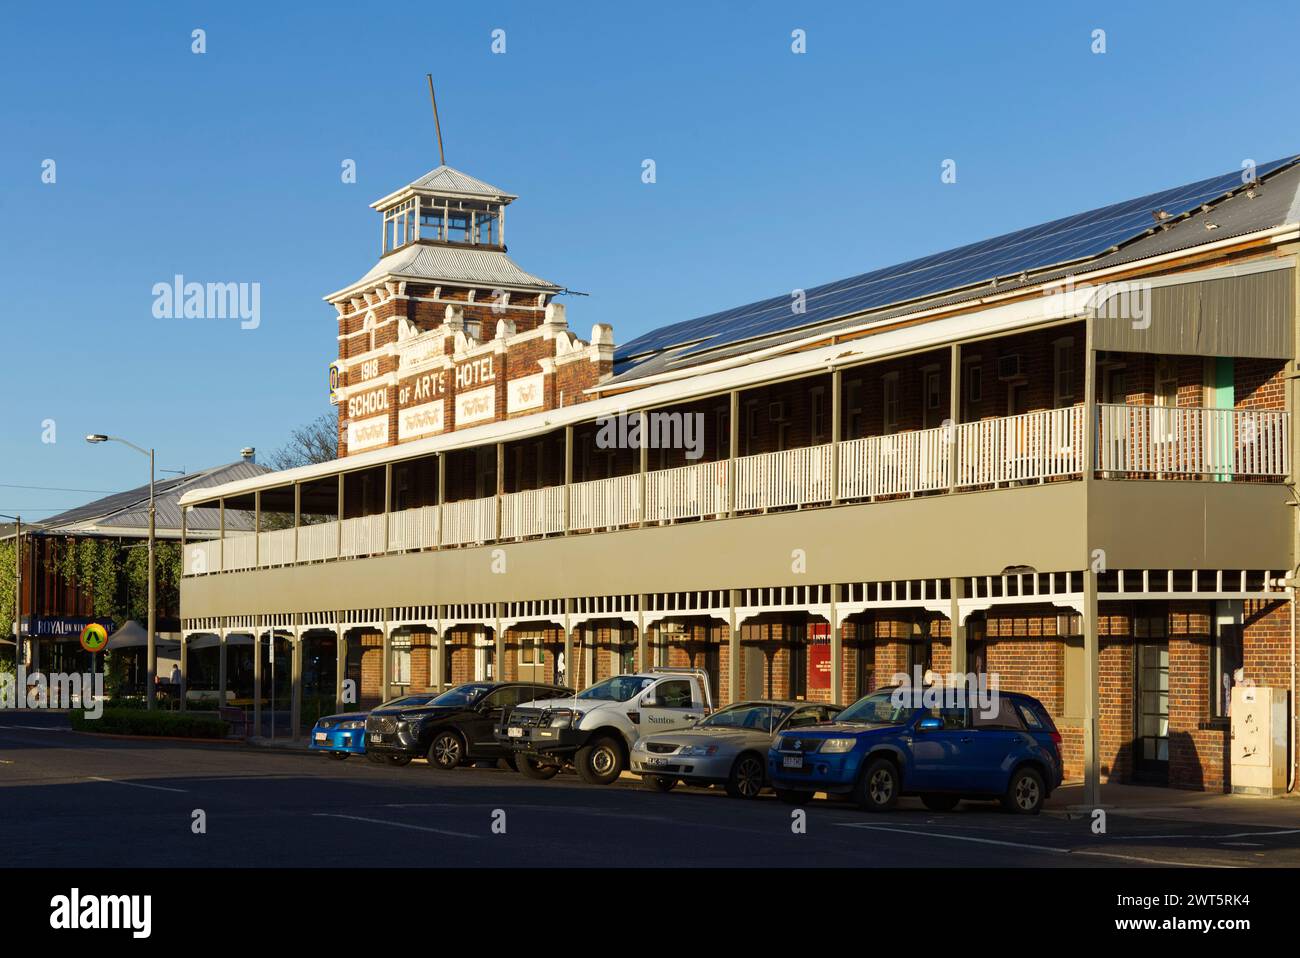 Das historische School of Arts Hotel (1918) an der McDowall Street Roma Queensland Australien Stockfoto